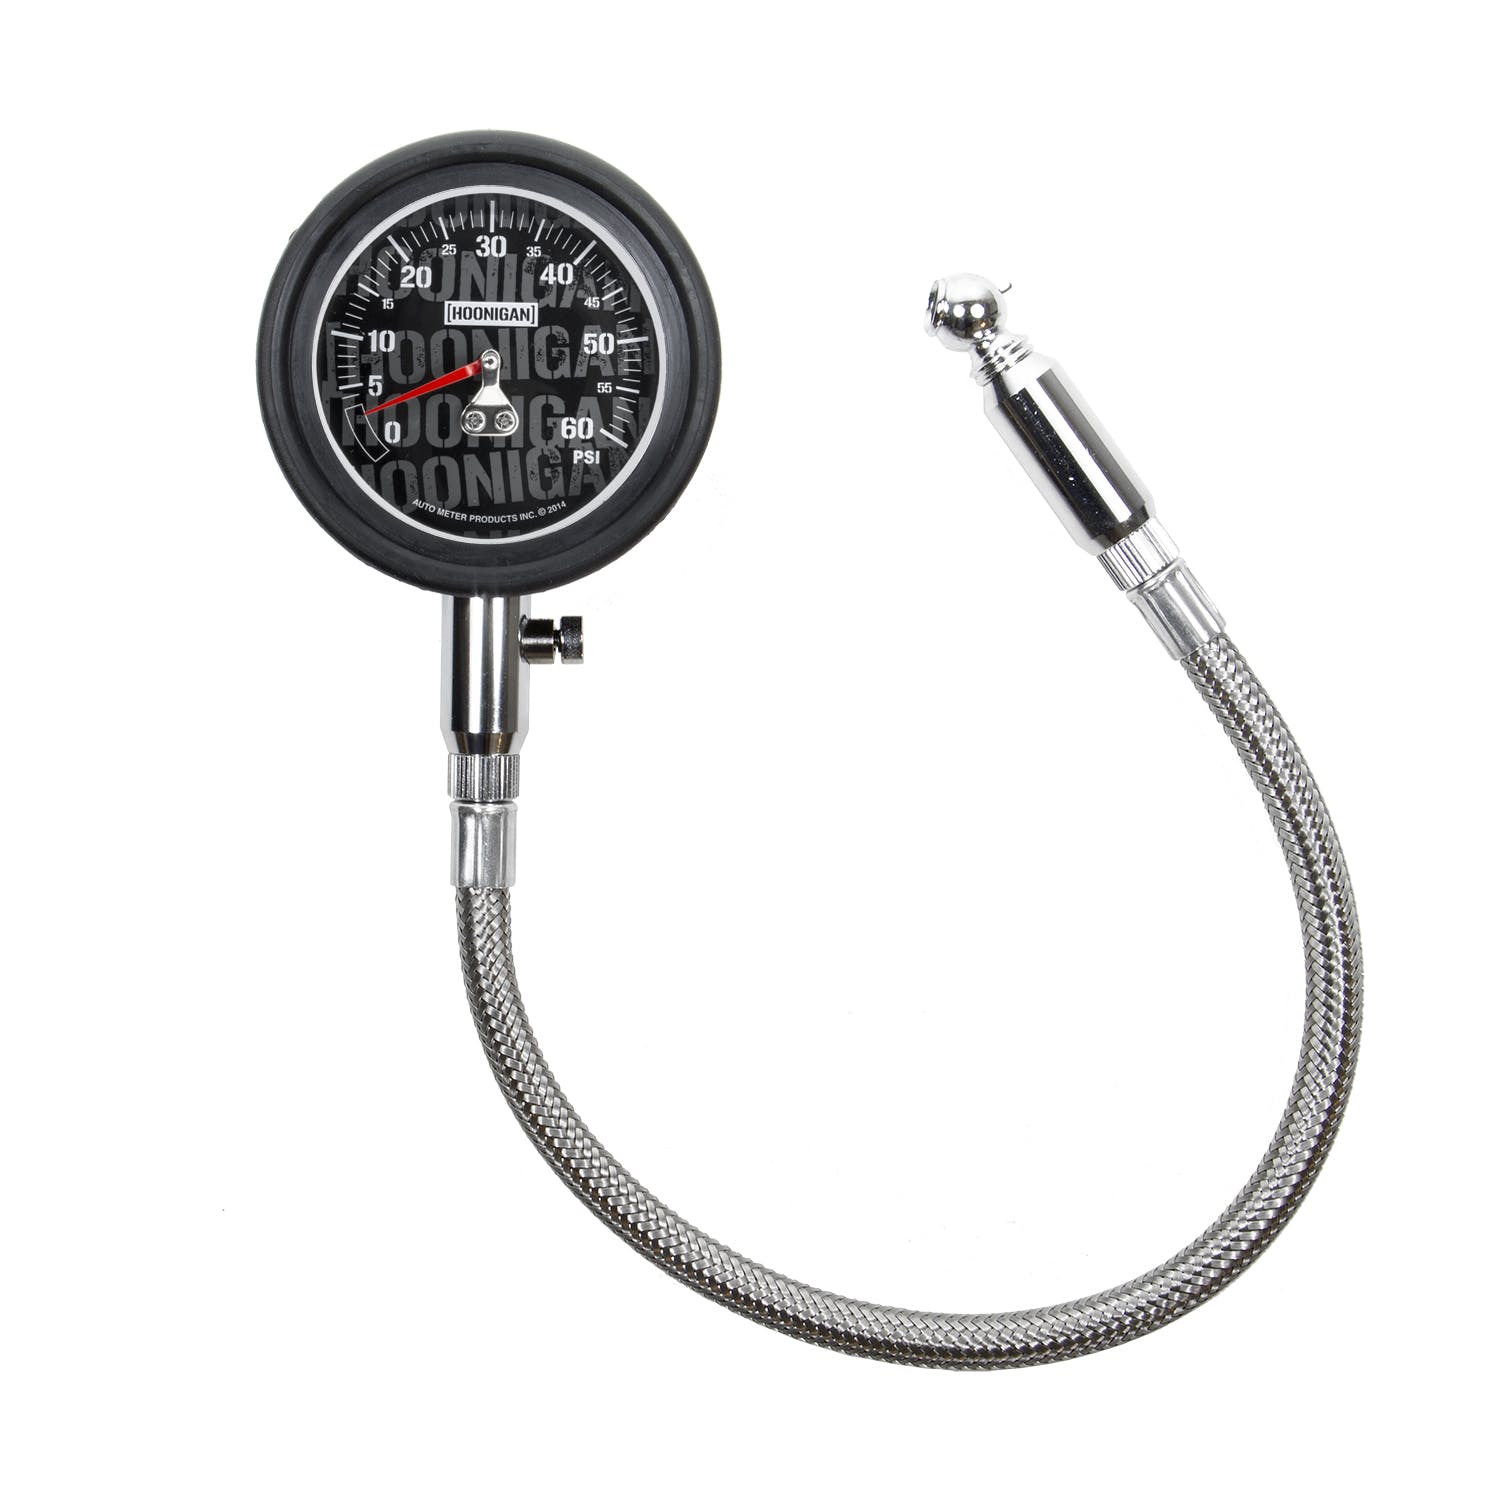 AutoMeter Products 2160-09000 Hoonigan Gauge, Tire Pressure, 0-60psi, Analog